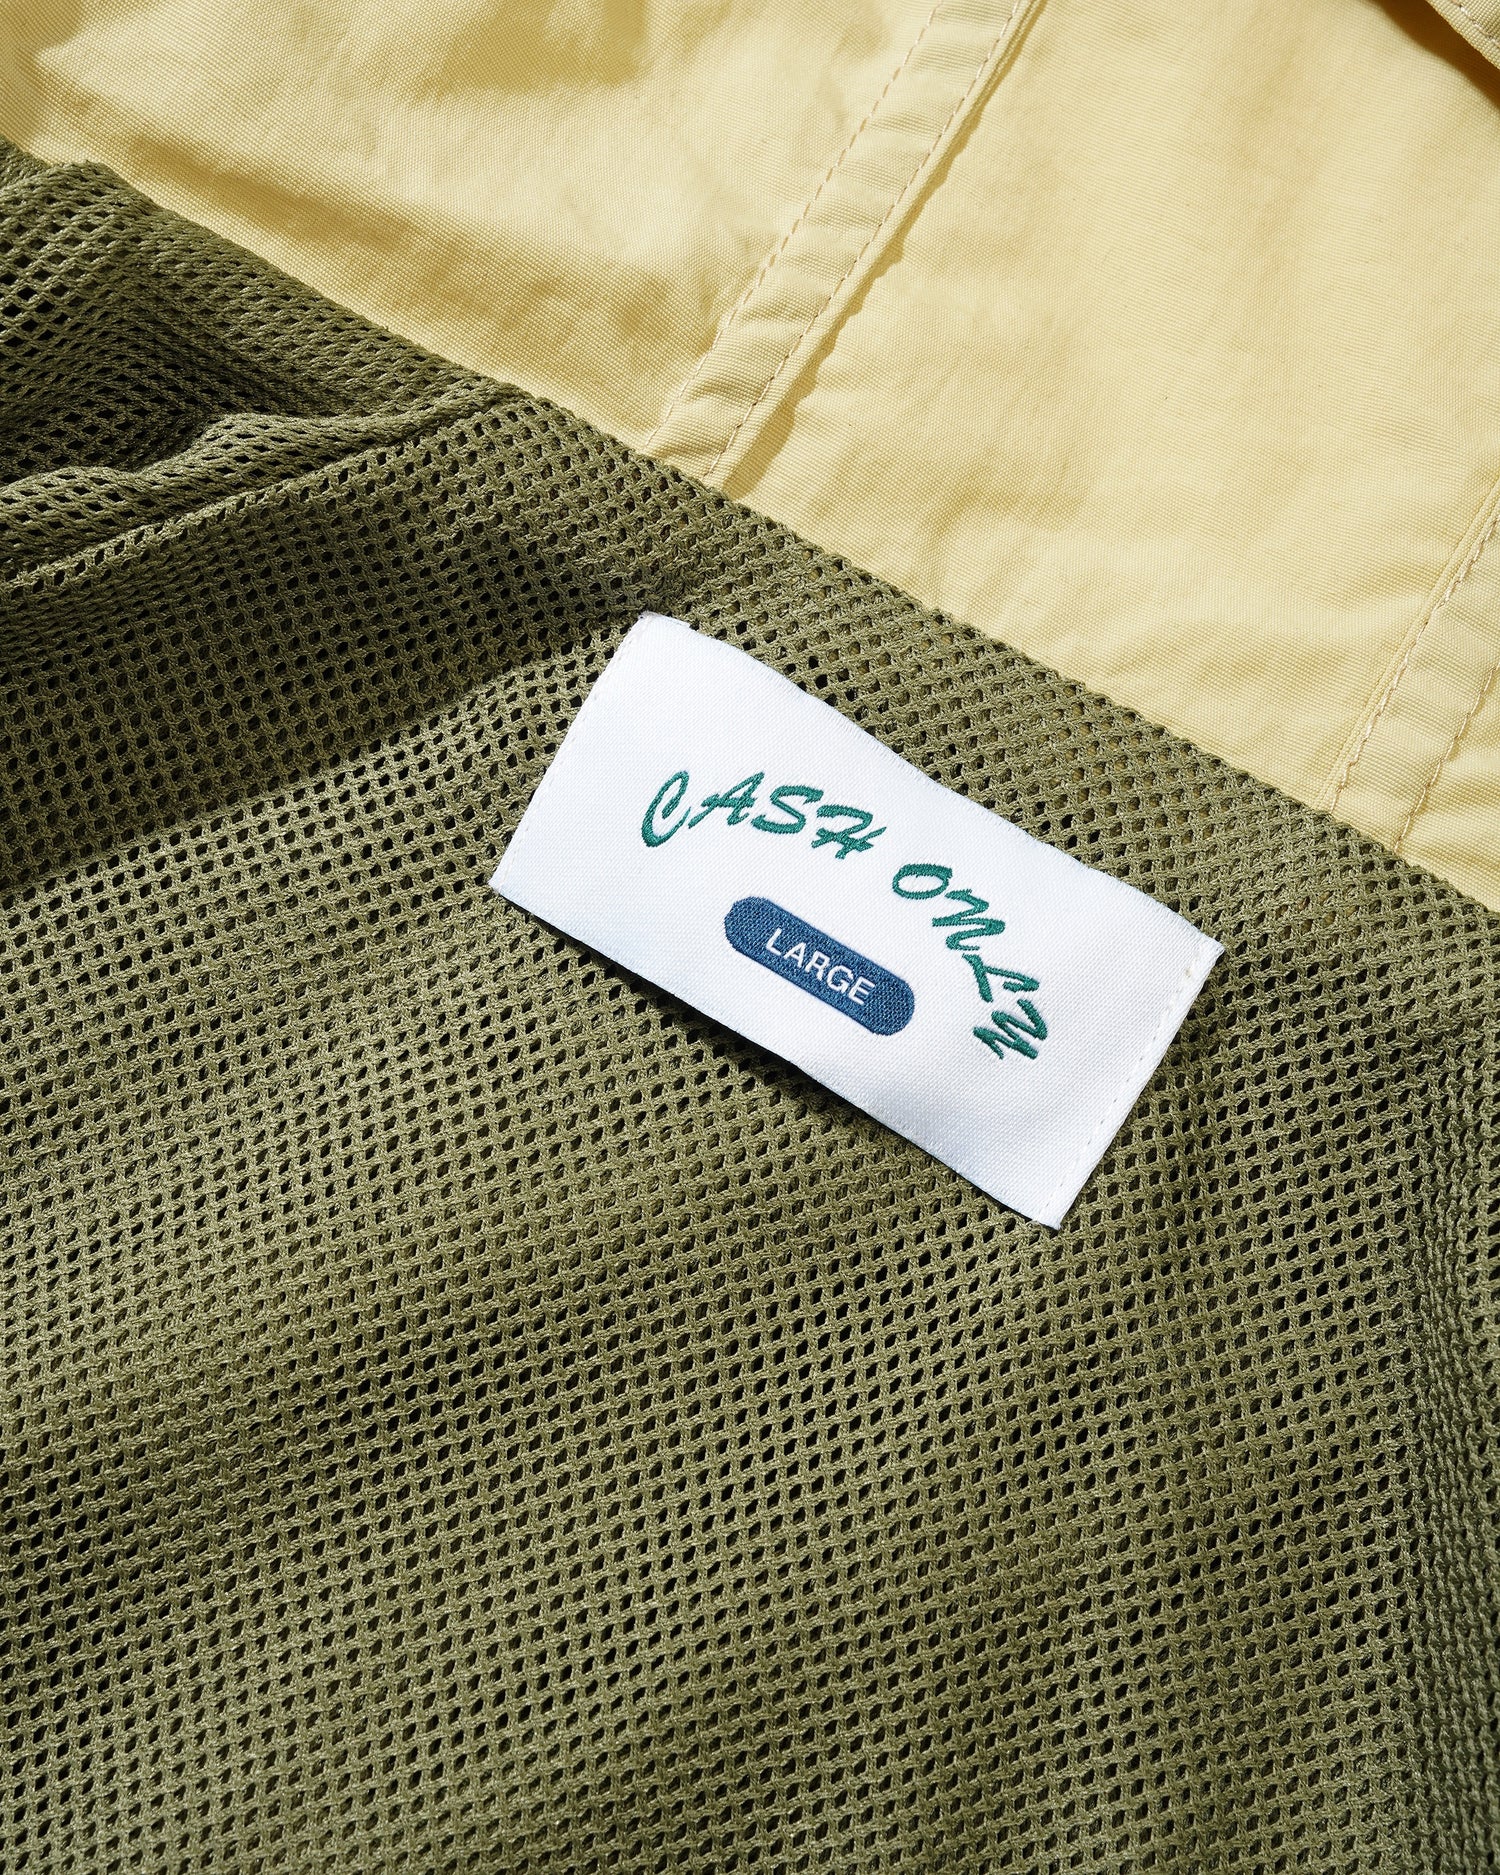 Transit Nylon Jacket, Army / Tan